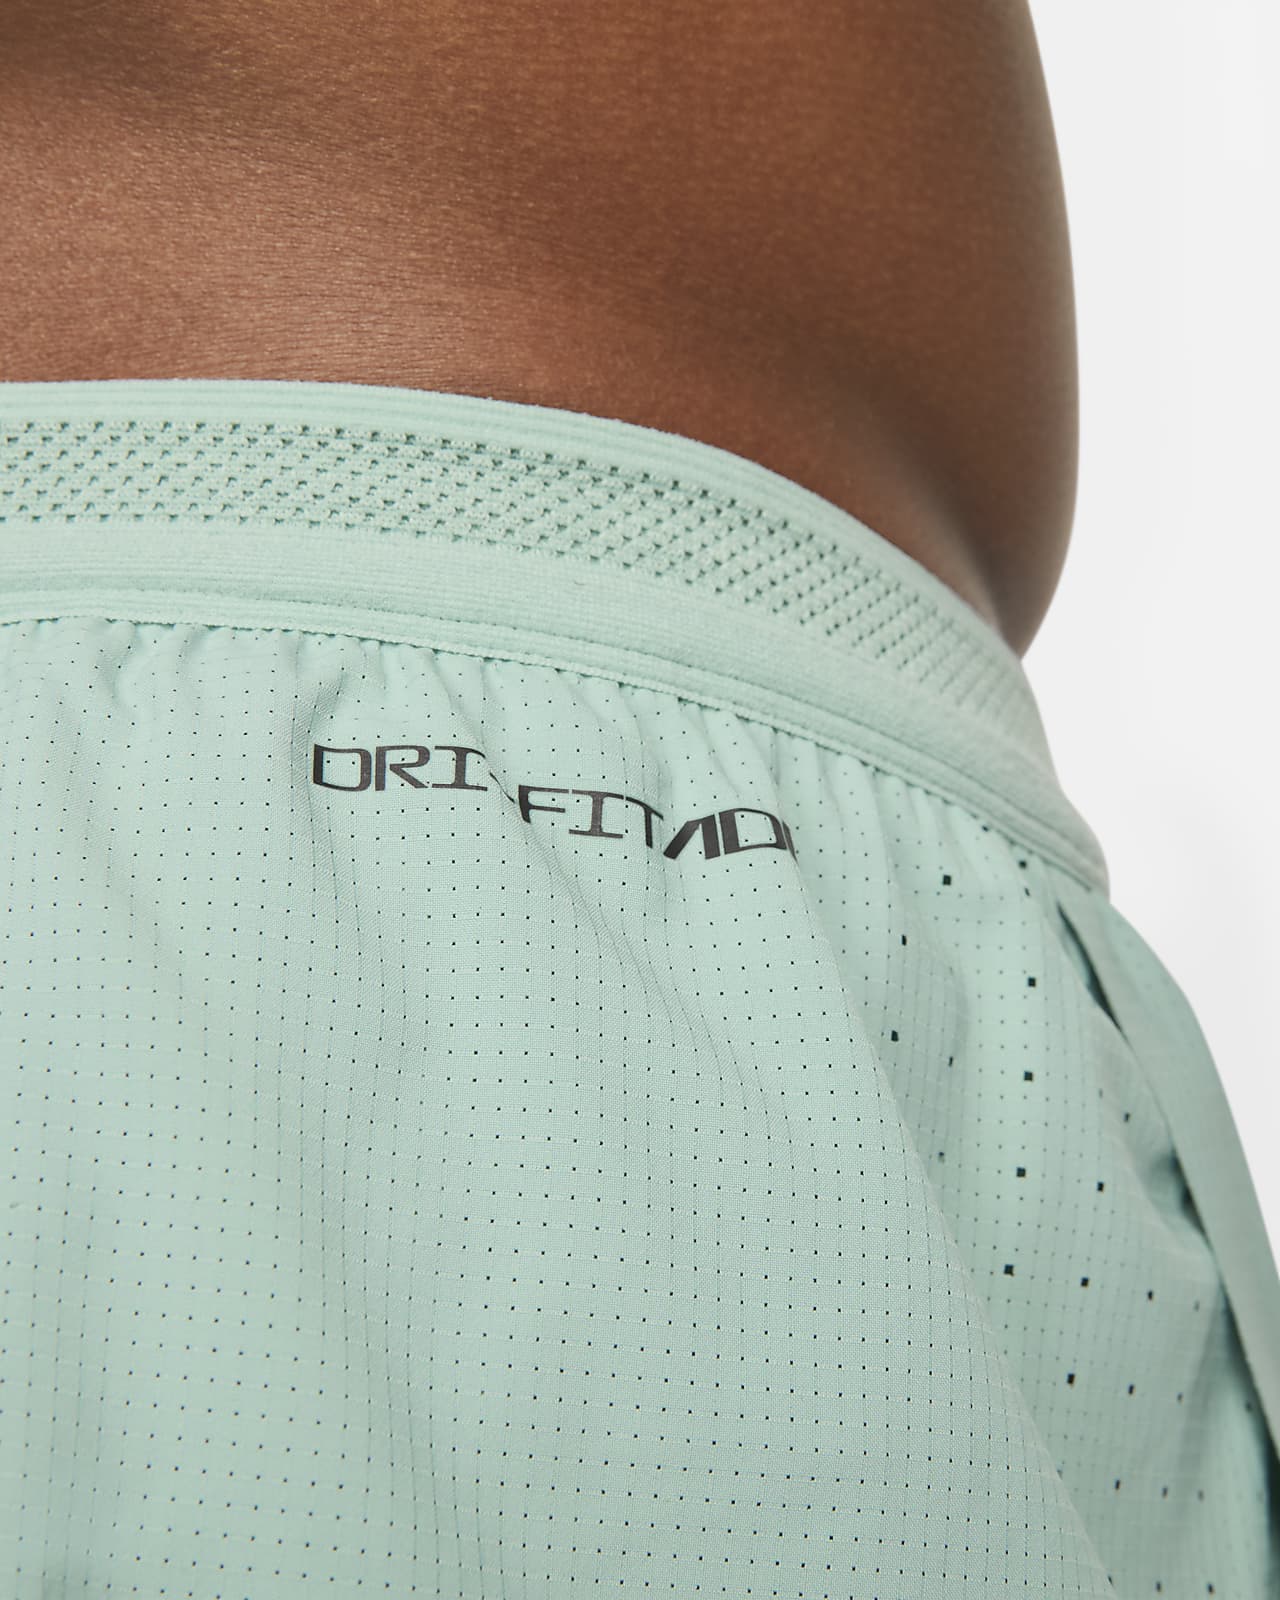 Nike Dri-Fit Racing Hyper Pink Running Shorts CJ7840-639 Men's Size XL